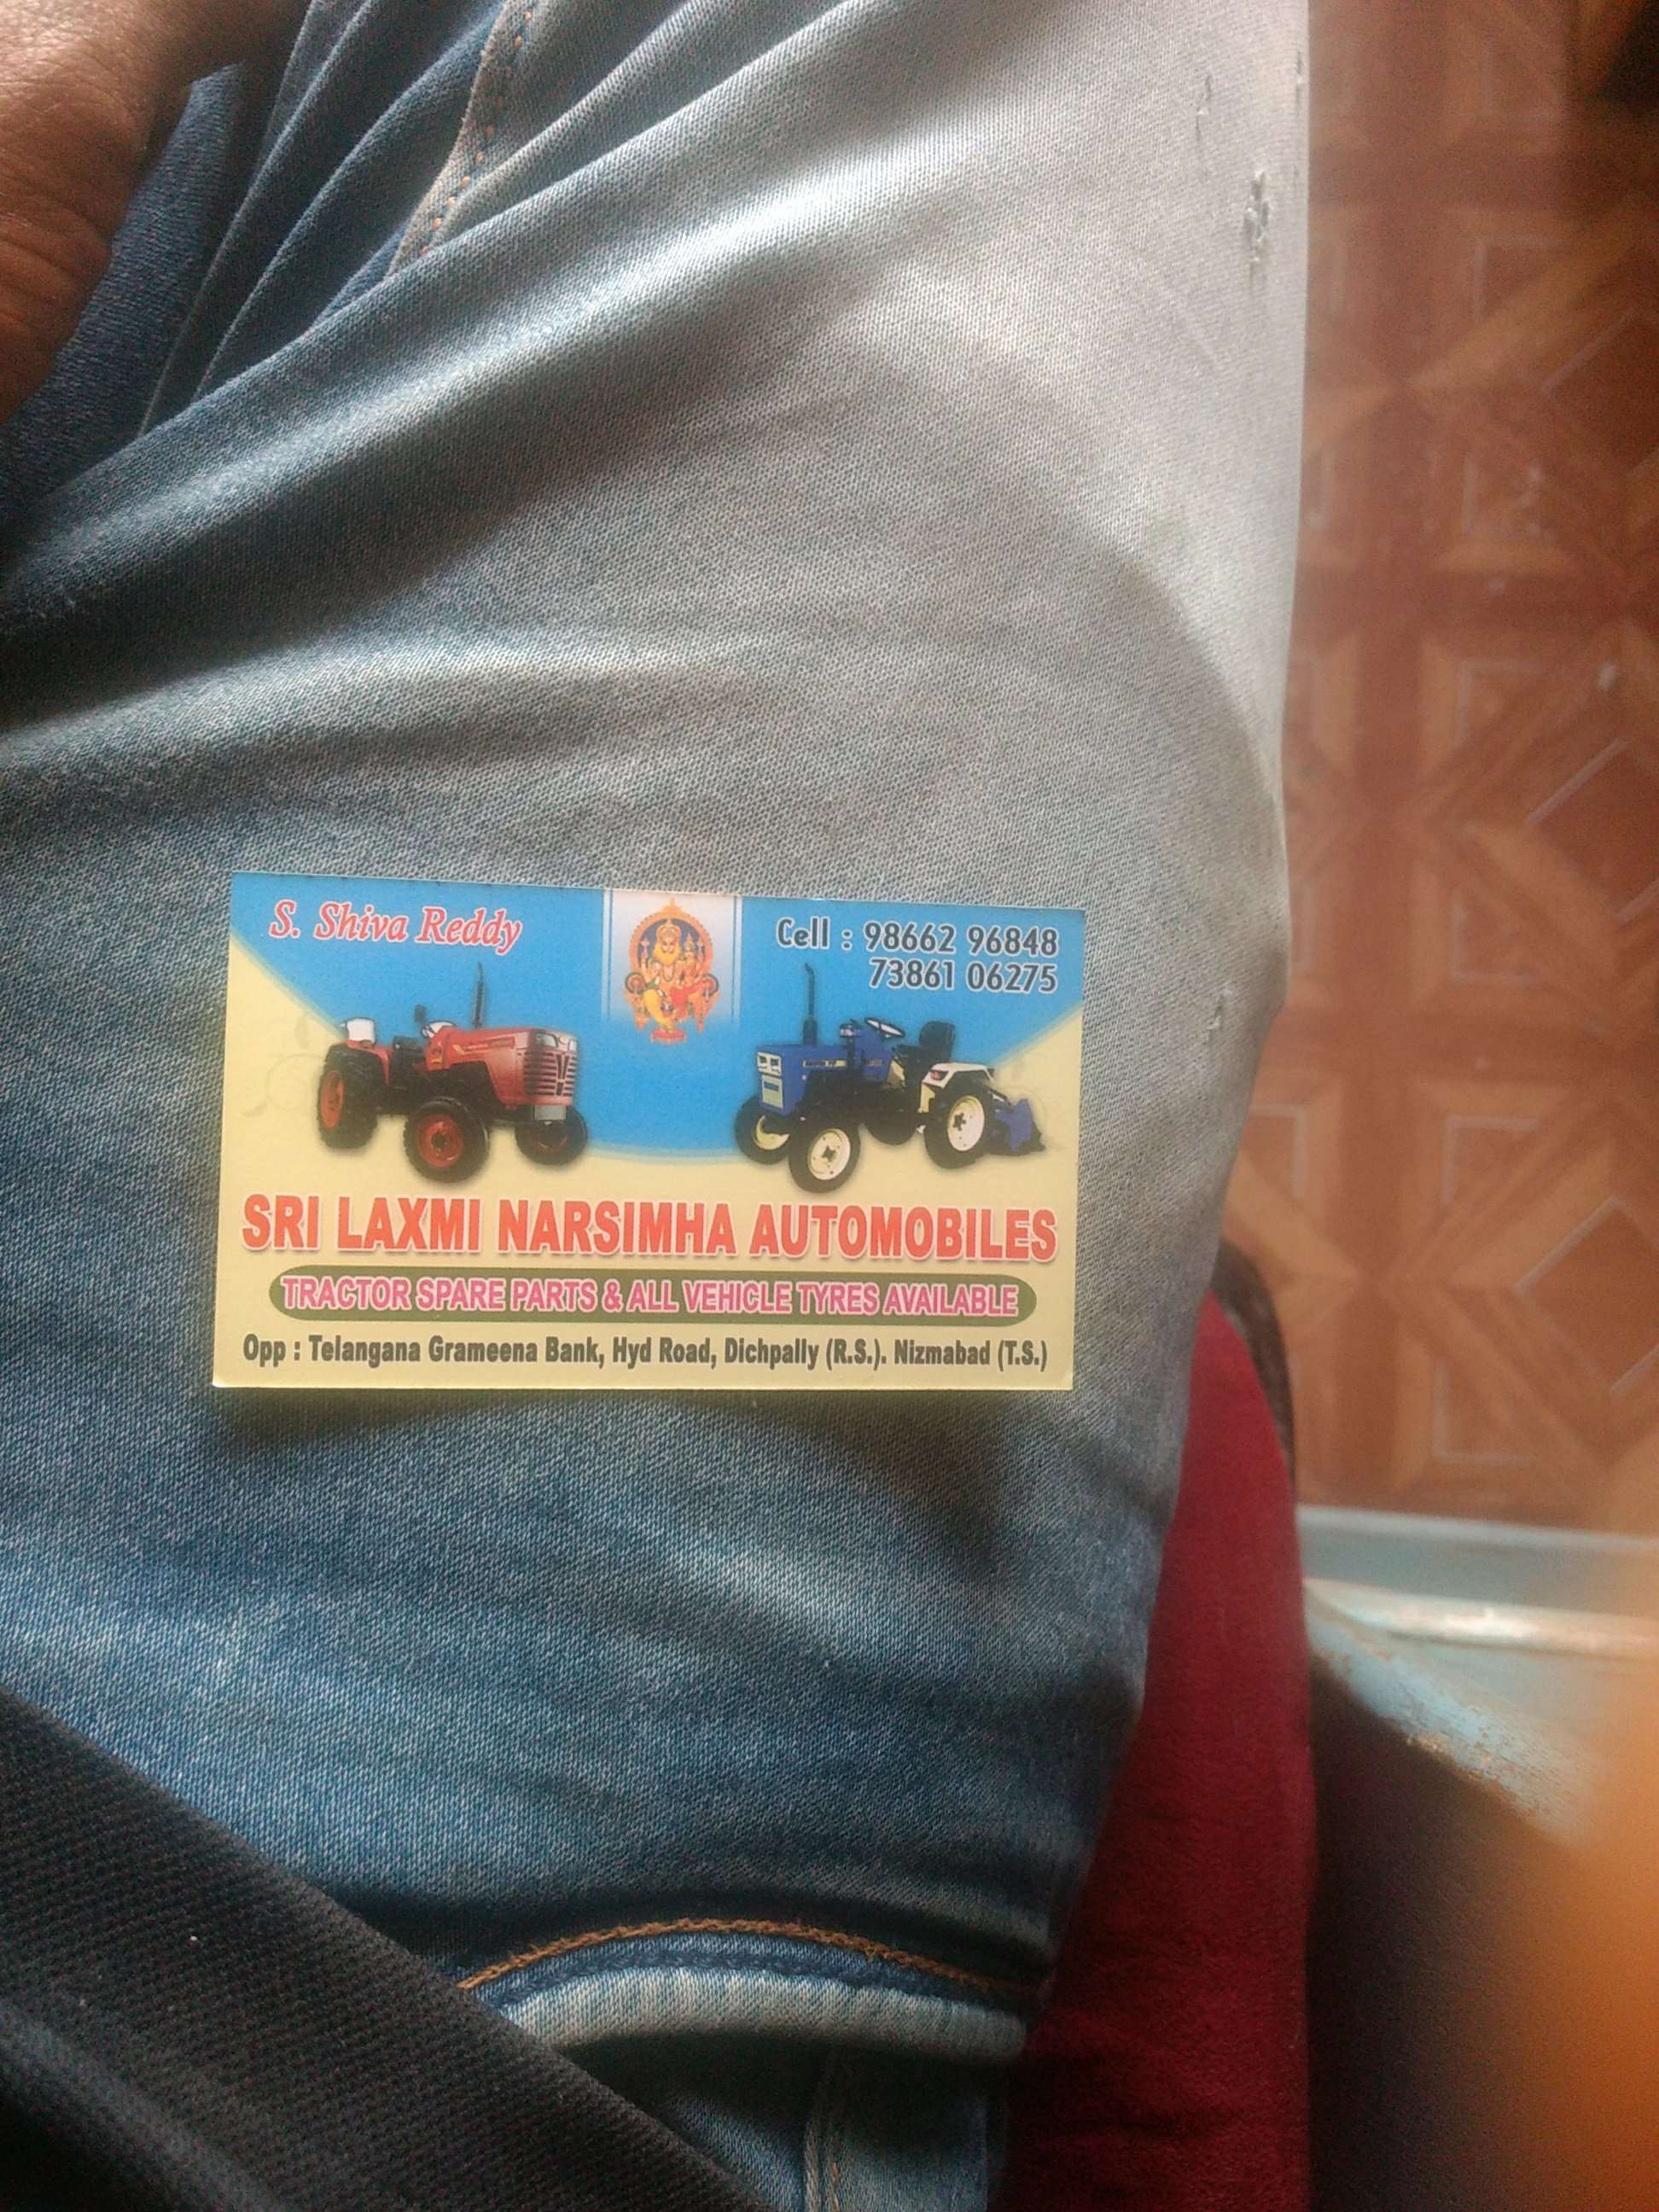 Sri Laxmi Narasimha Automobile Dichpally